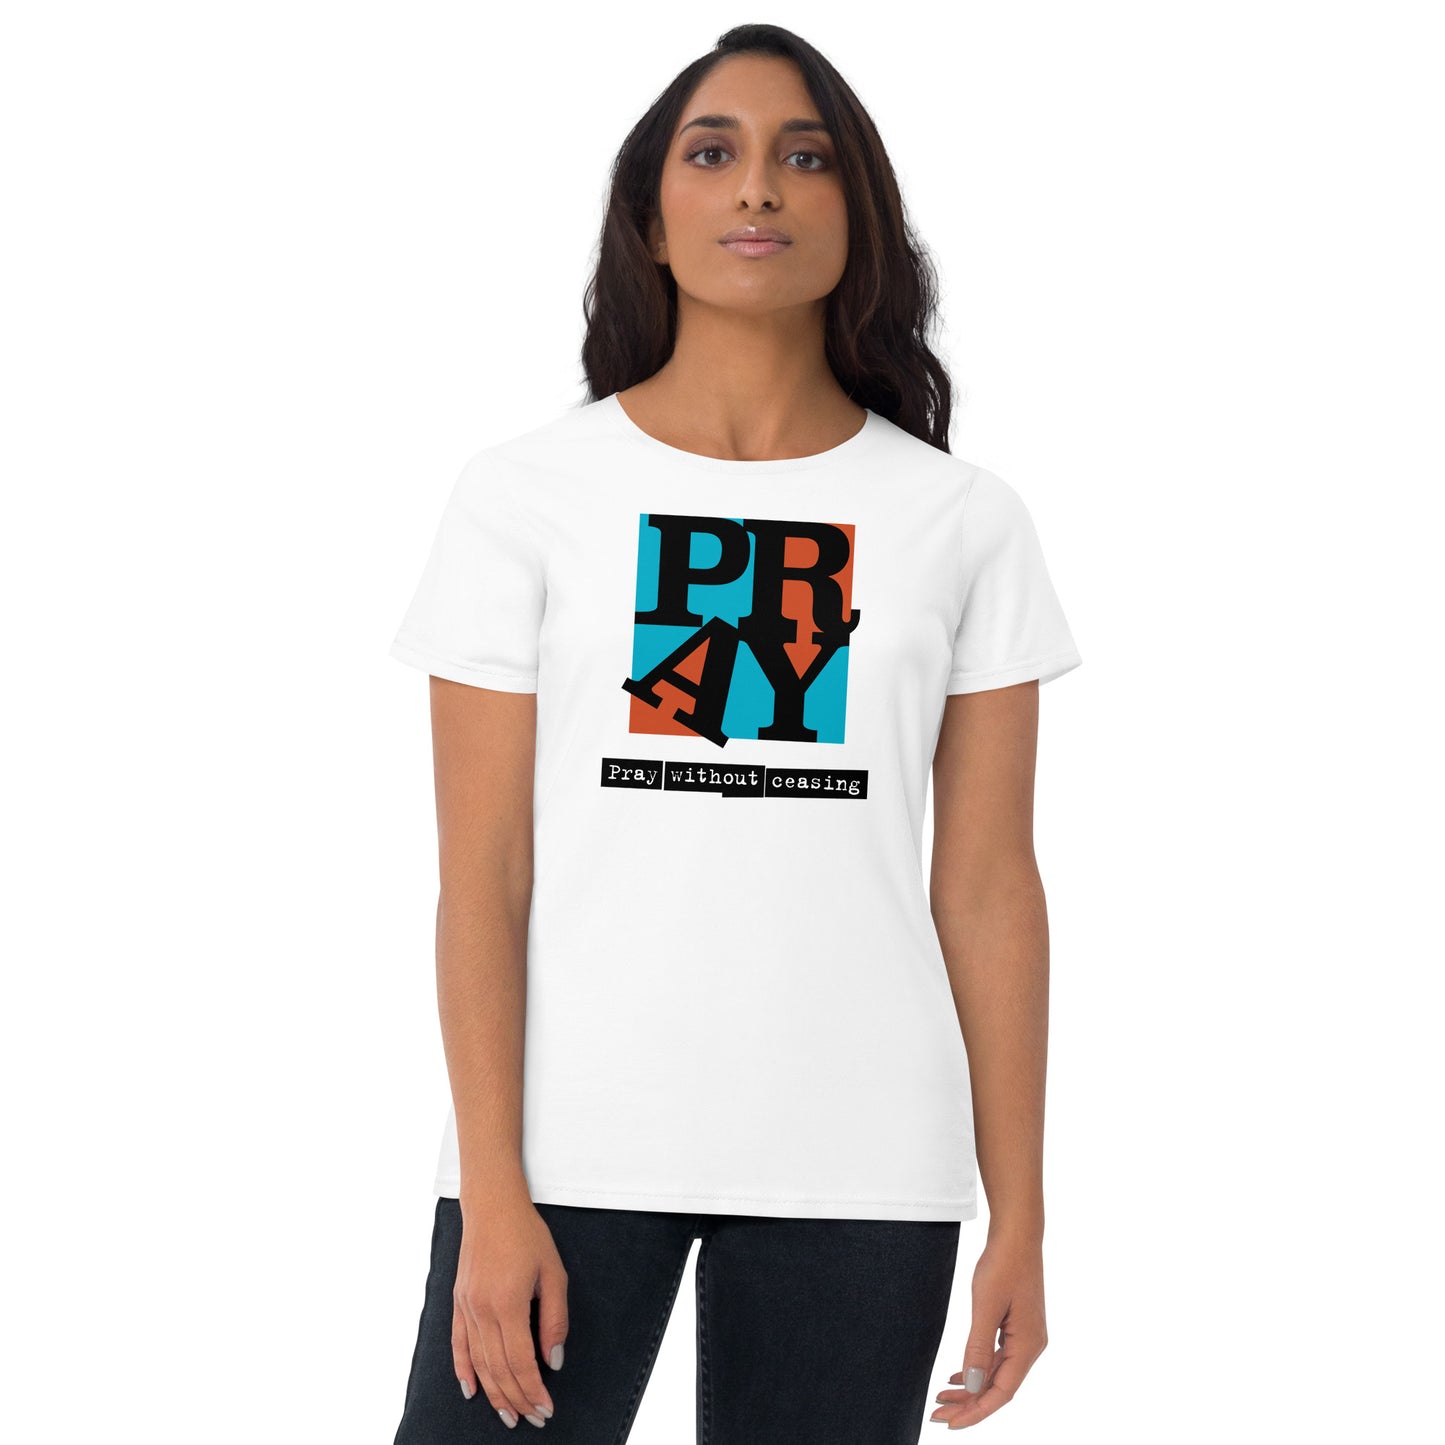 Pray Without Ceasing- women's premium t-shirt